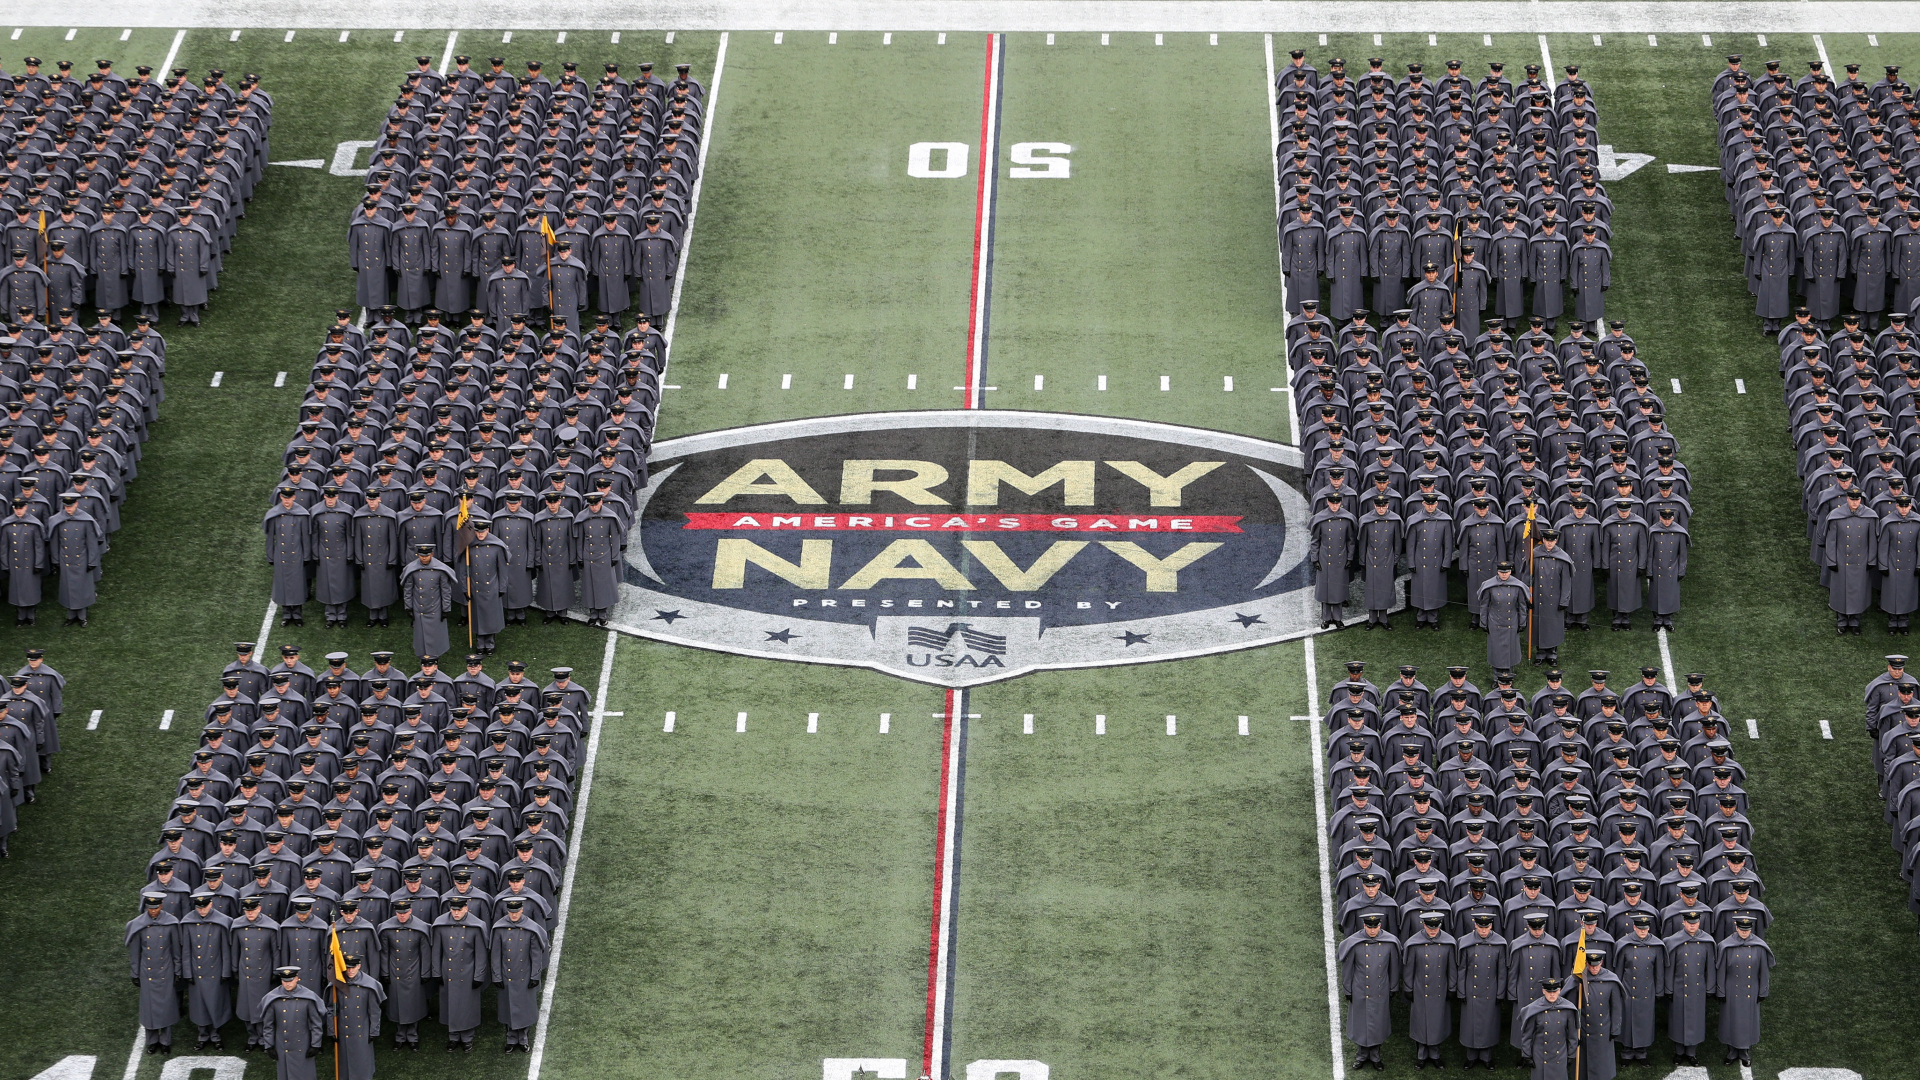 Patriots, Celebrities Flood Gillette Stadium For Army-Navy Game